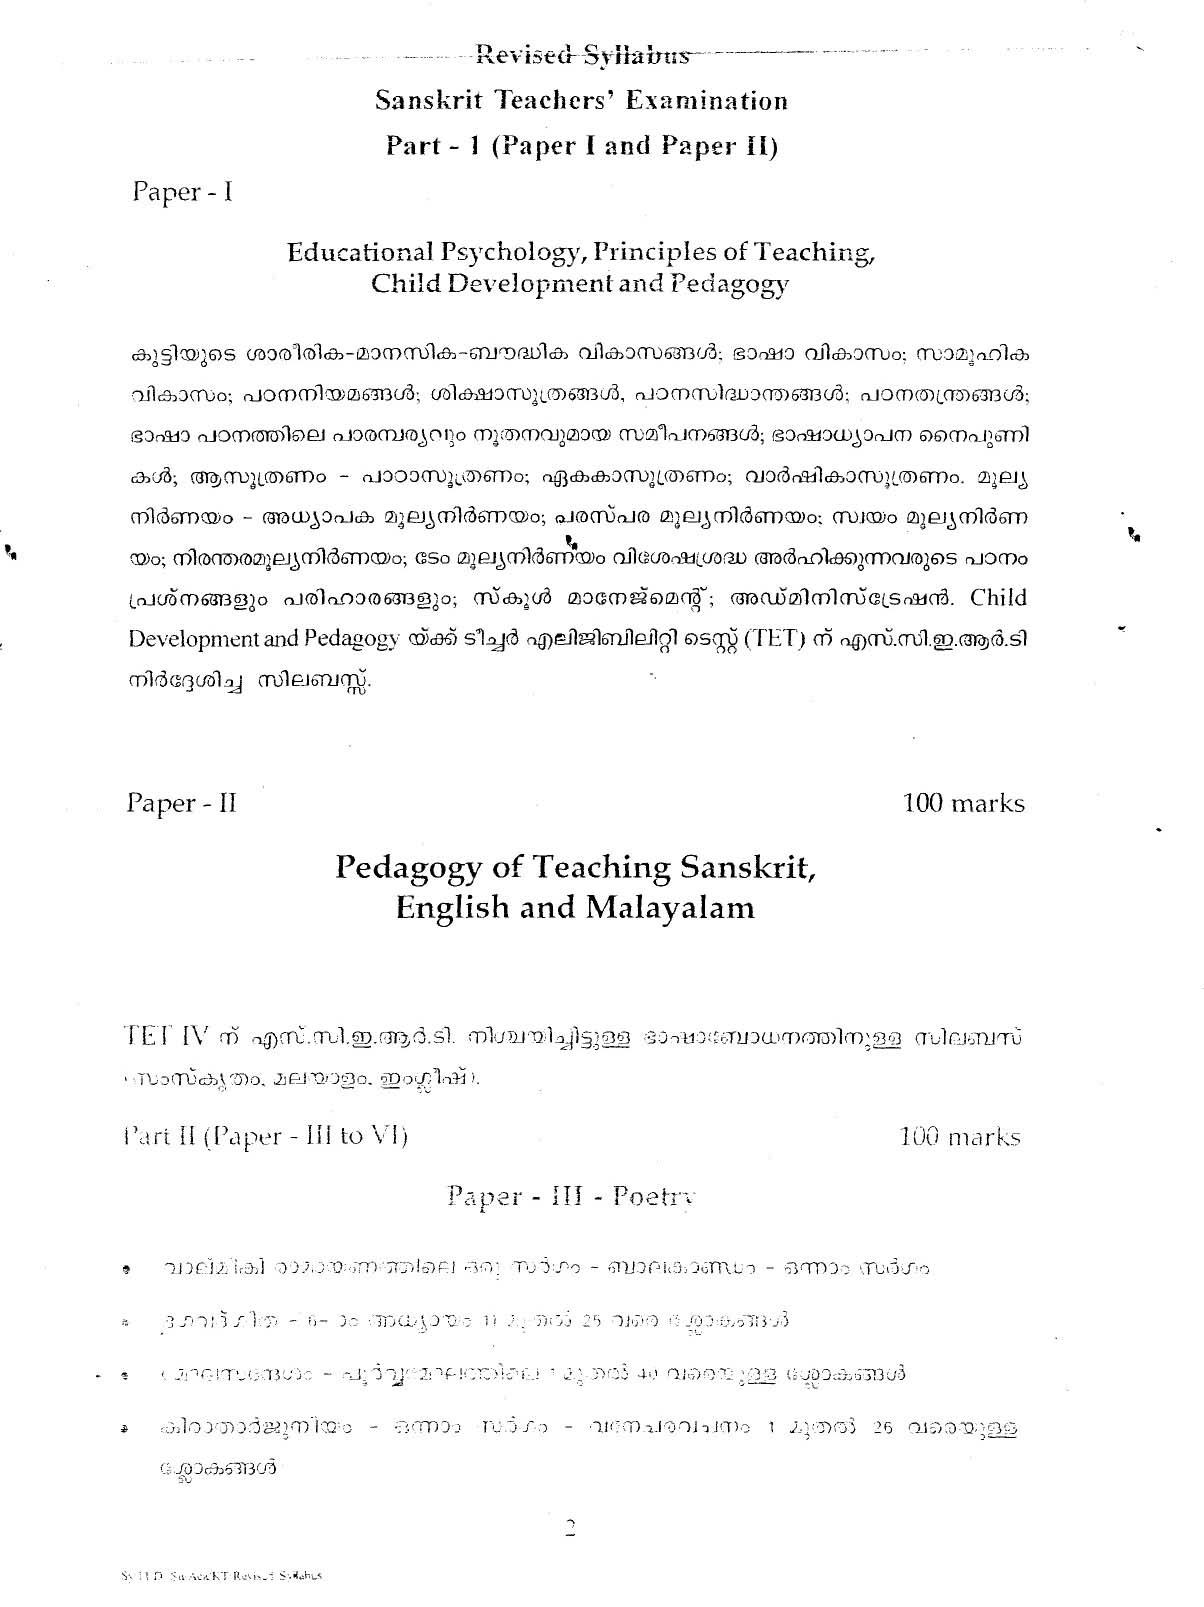 KTET Exam Syllabus for Sanskrit Teacher Examination of The Year 2013 1